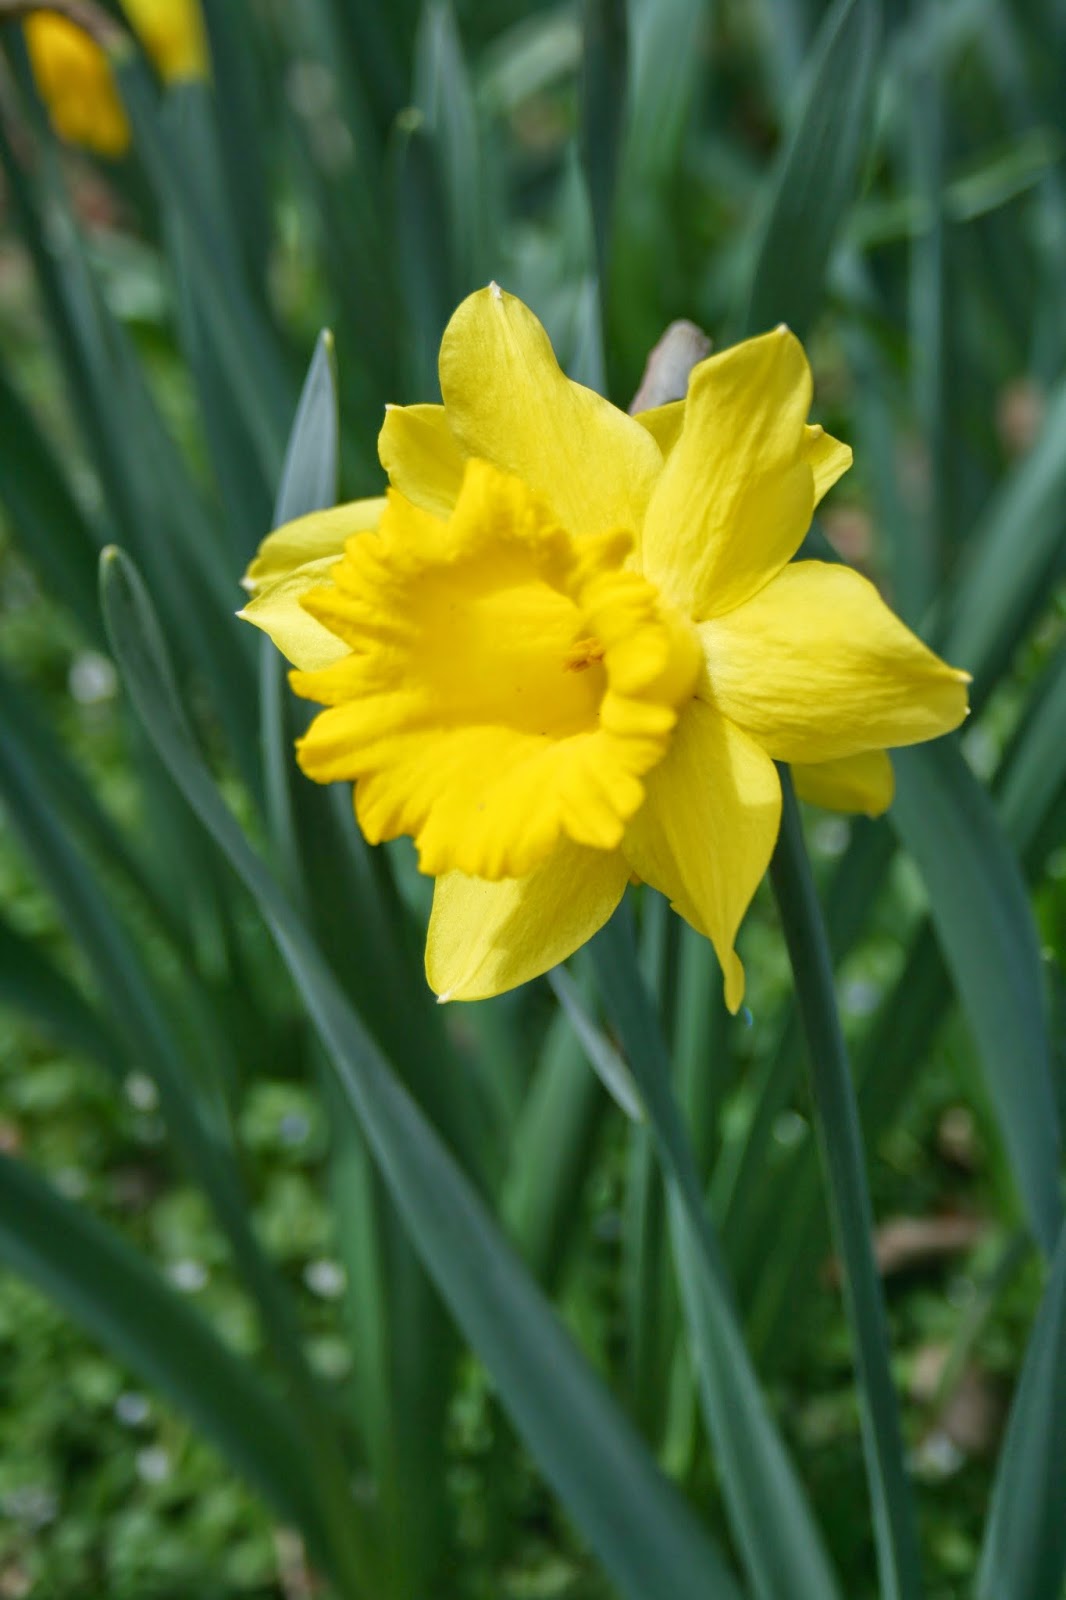 A Virginia Homestead: A host of golden daffodils